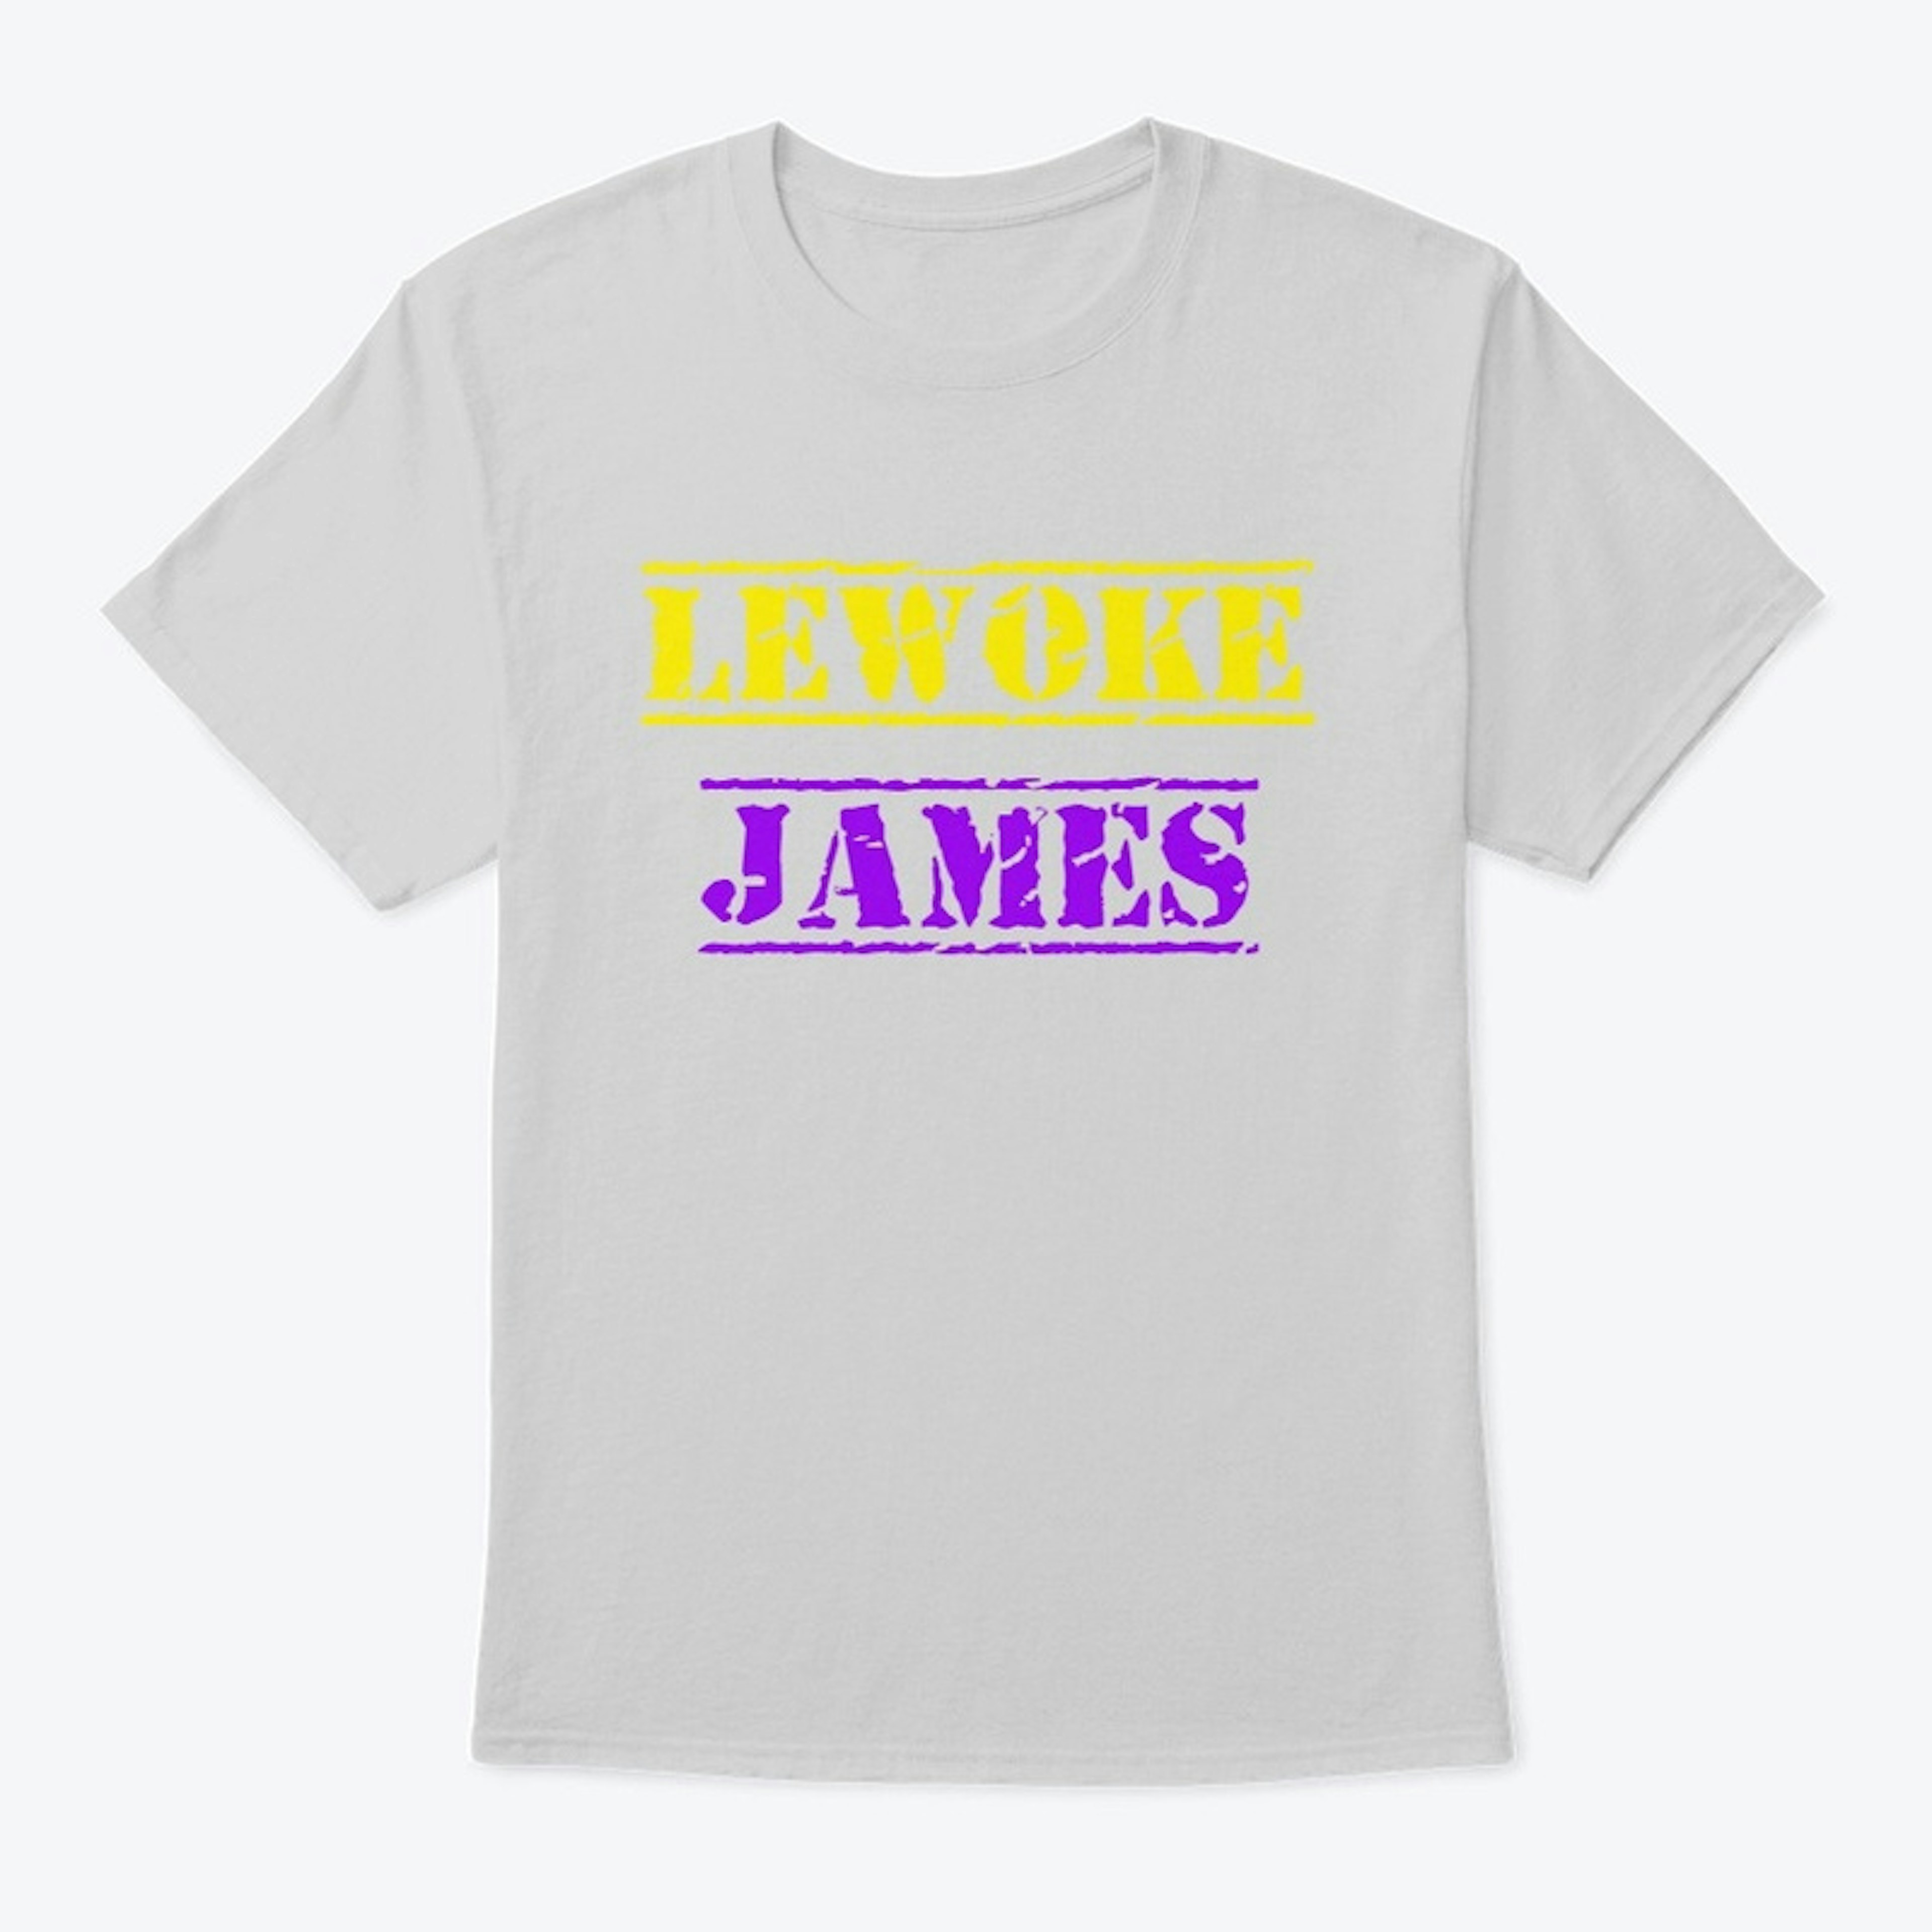 LeWoke James Shirt